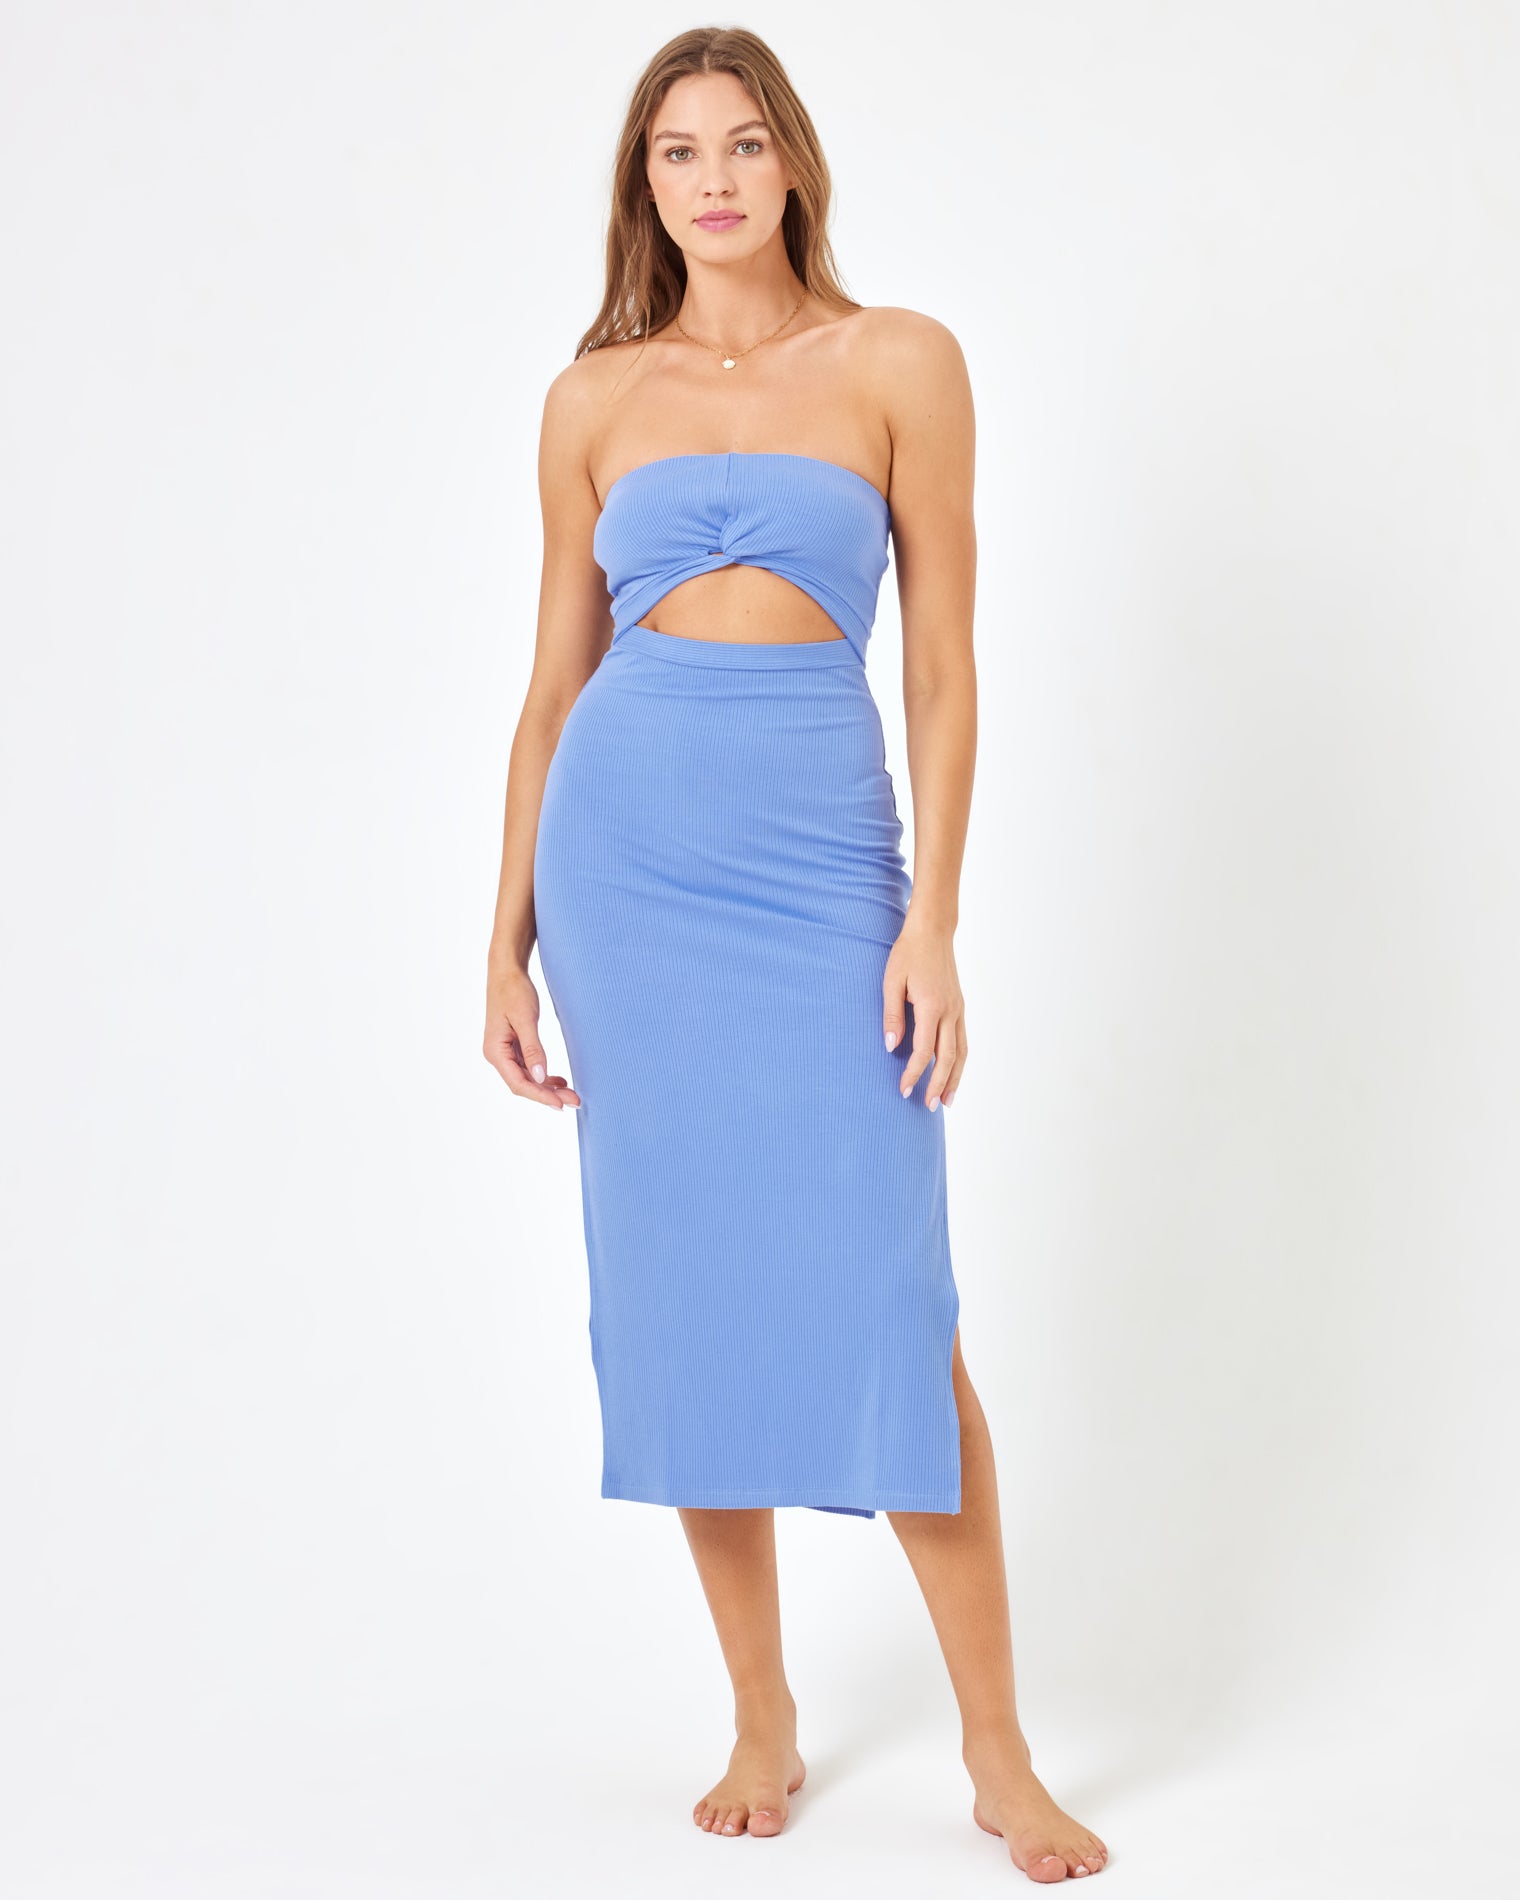 LSPACE X Anthropologie Kierra Dress - Peri Blue Peri Blue | Model: Daria (size: S) | Hover